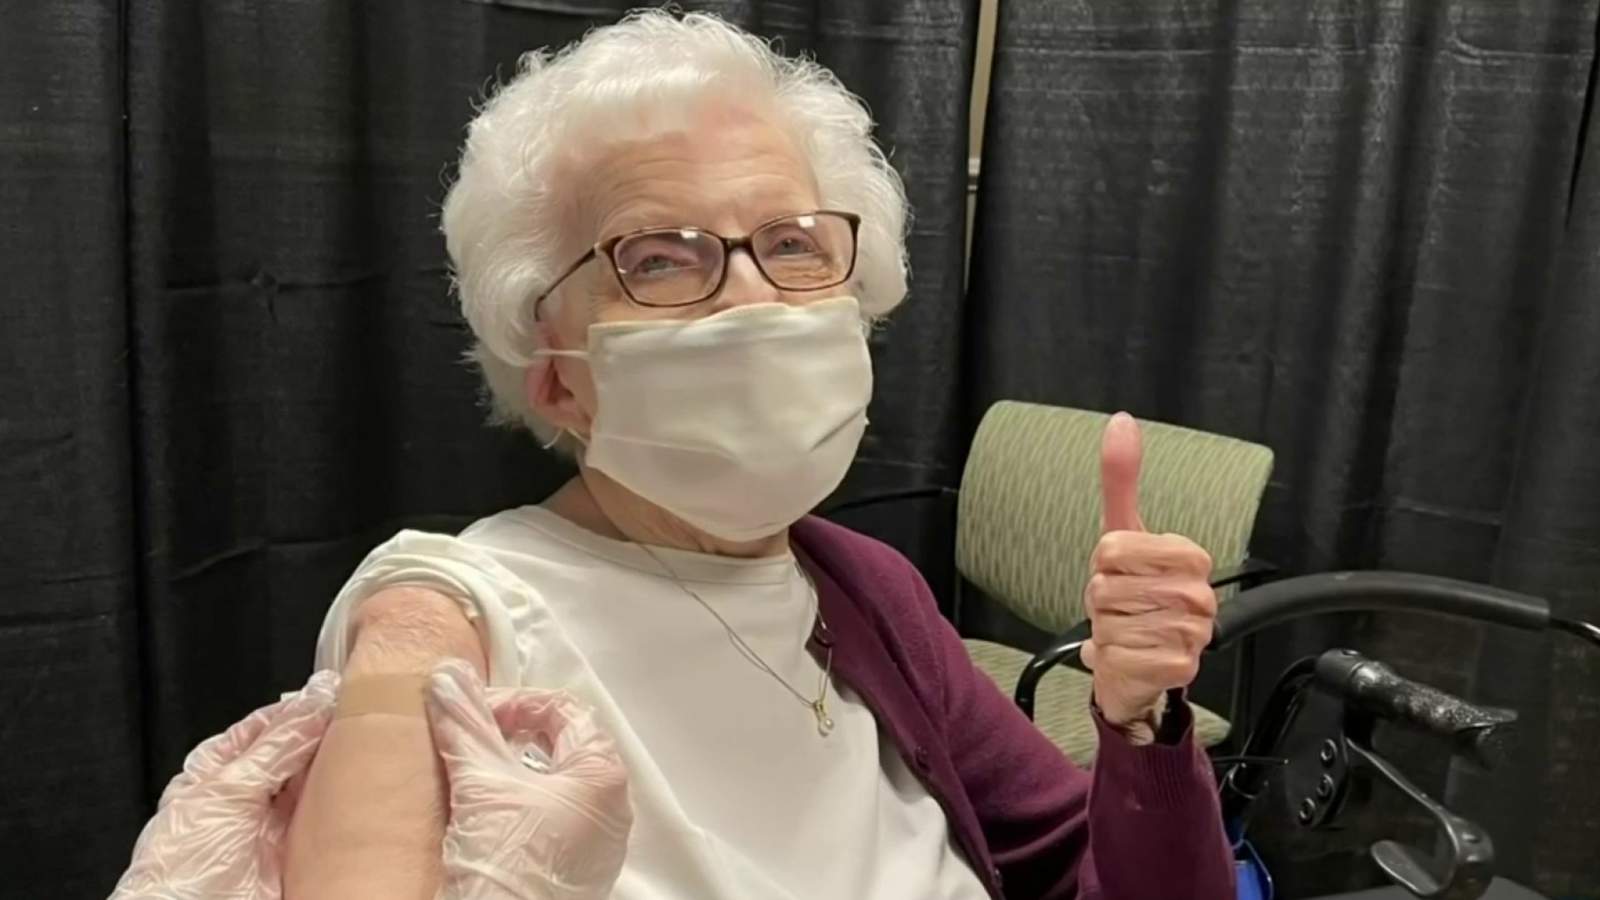 Metro Detroit retirement community celebrates getting second dose of COVID vaccine